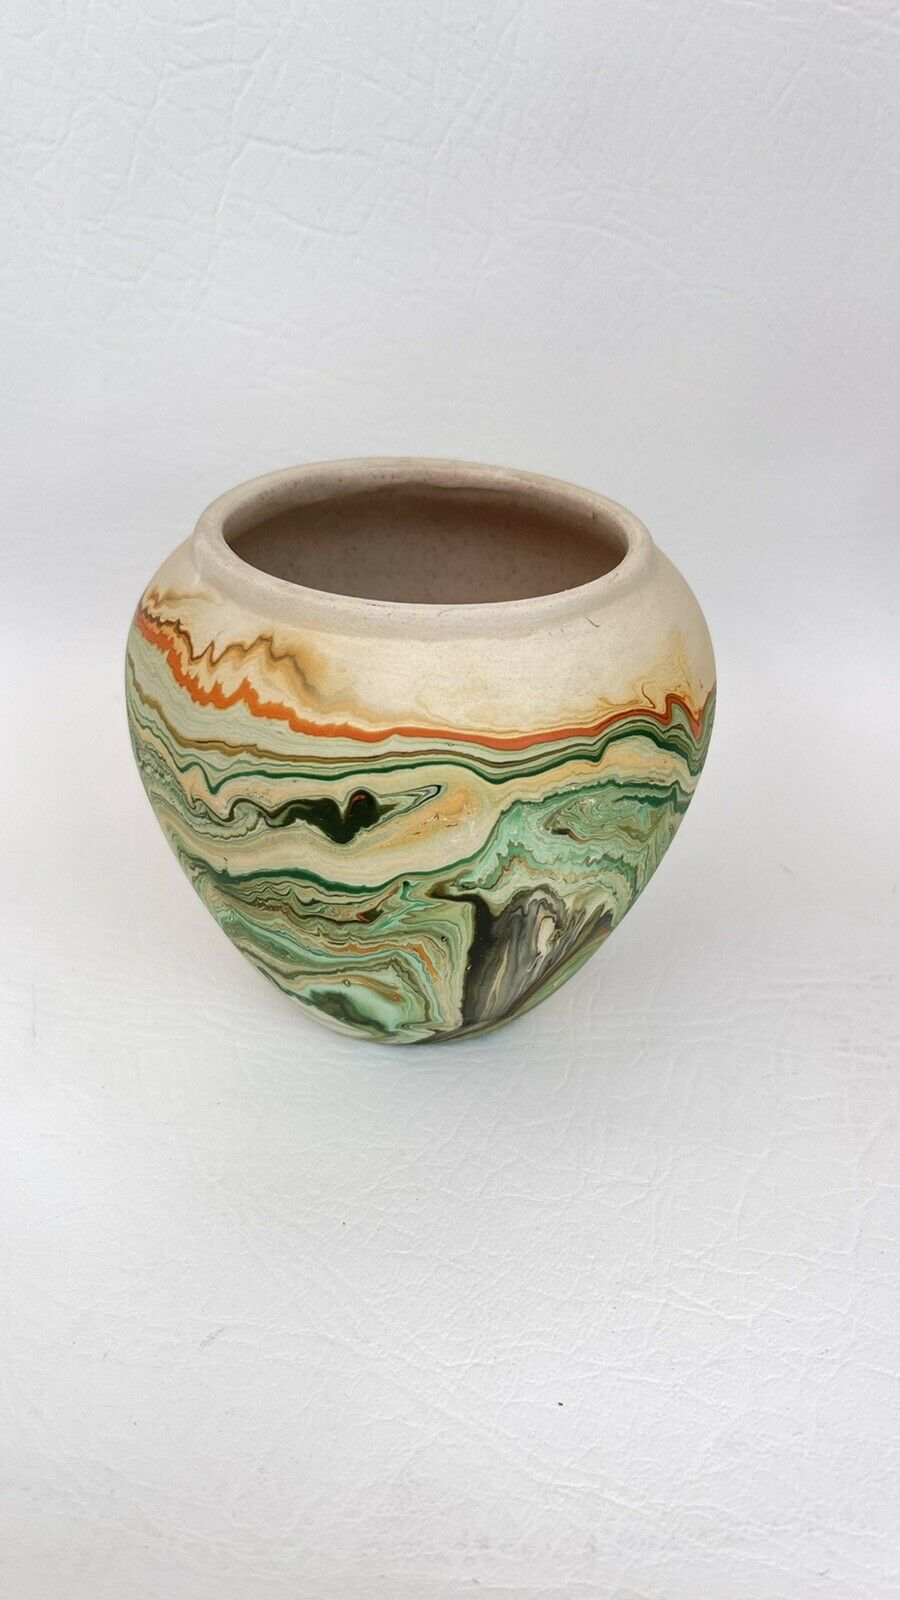 Nemadji Pottery Vase Shades Of Green Orange On Tan Background  4” Tall 4.5” Wide